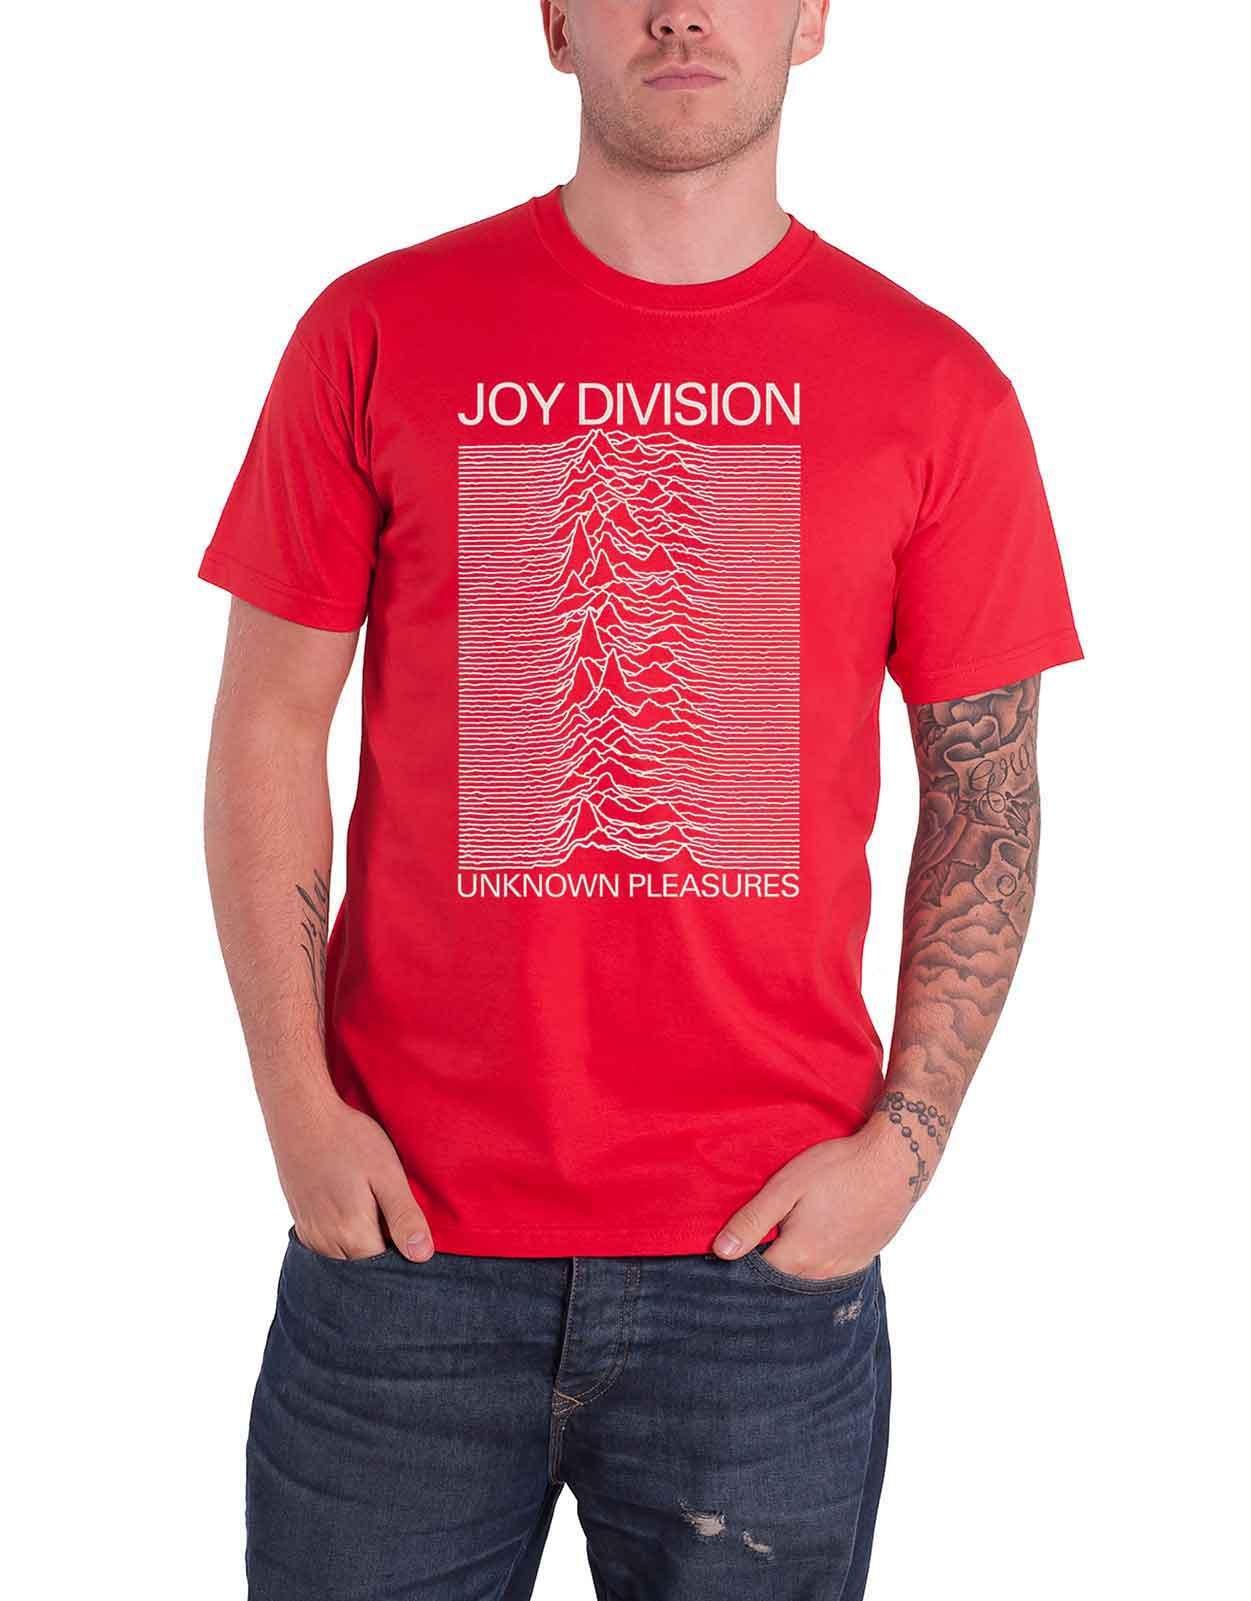 Бело-красная футболка Unknown Pleasures Joy Division, красный